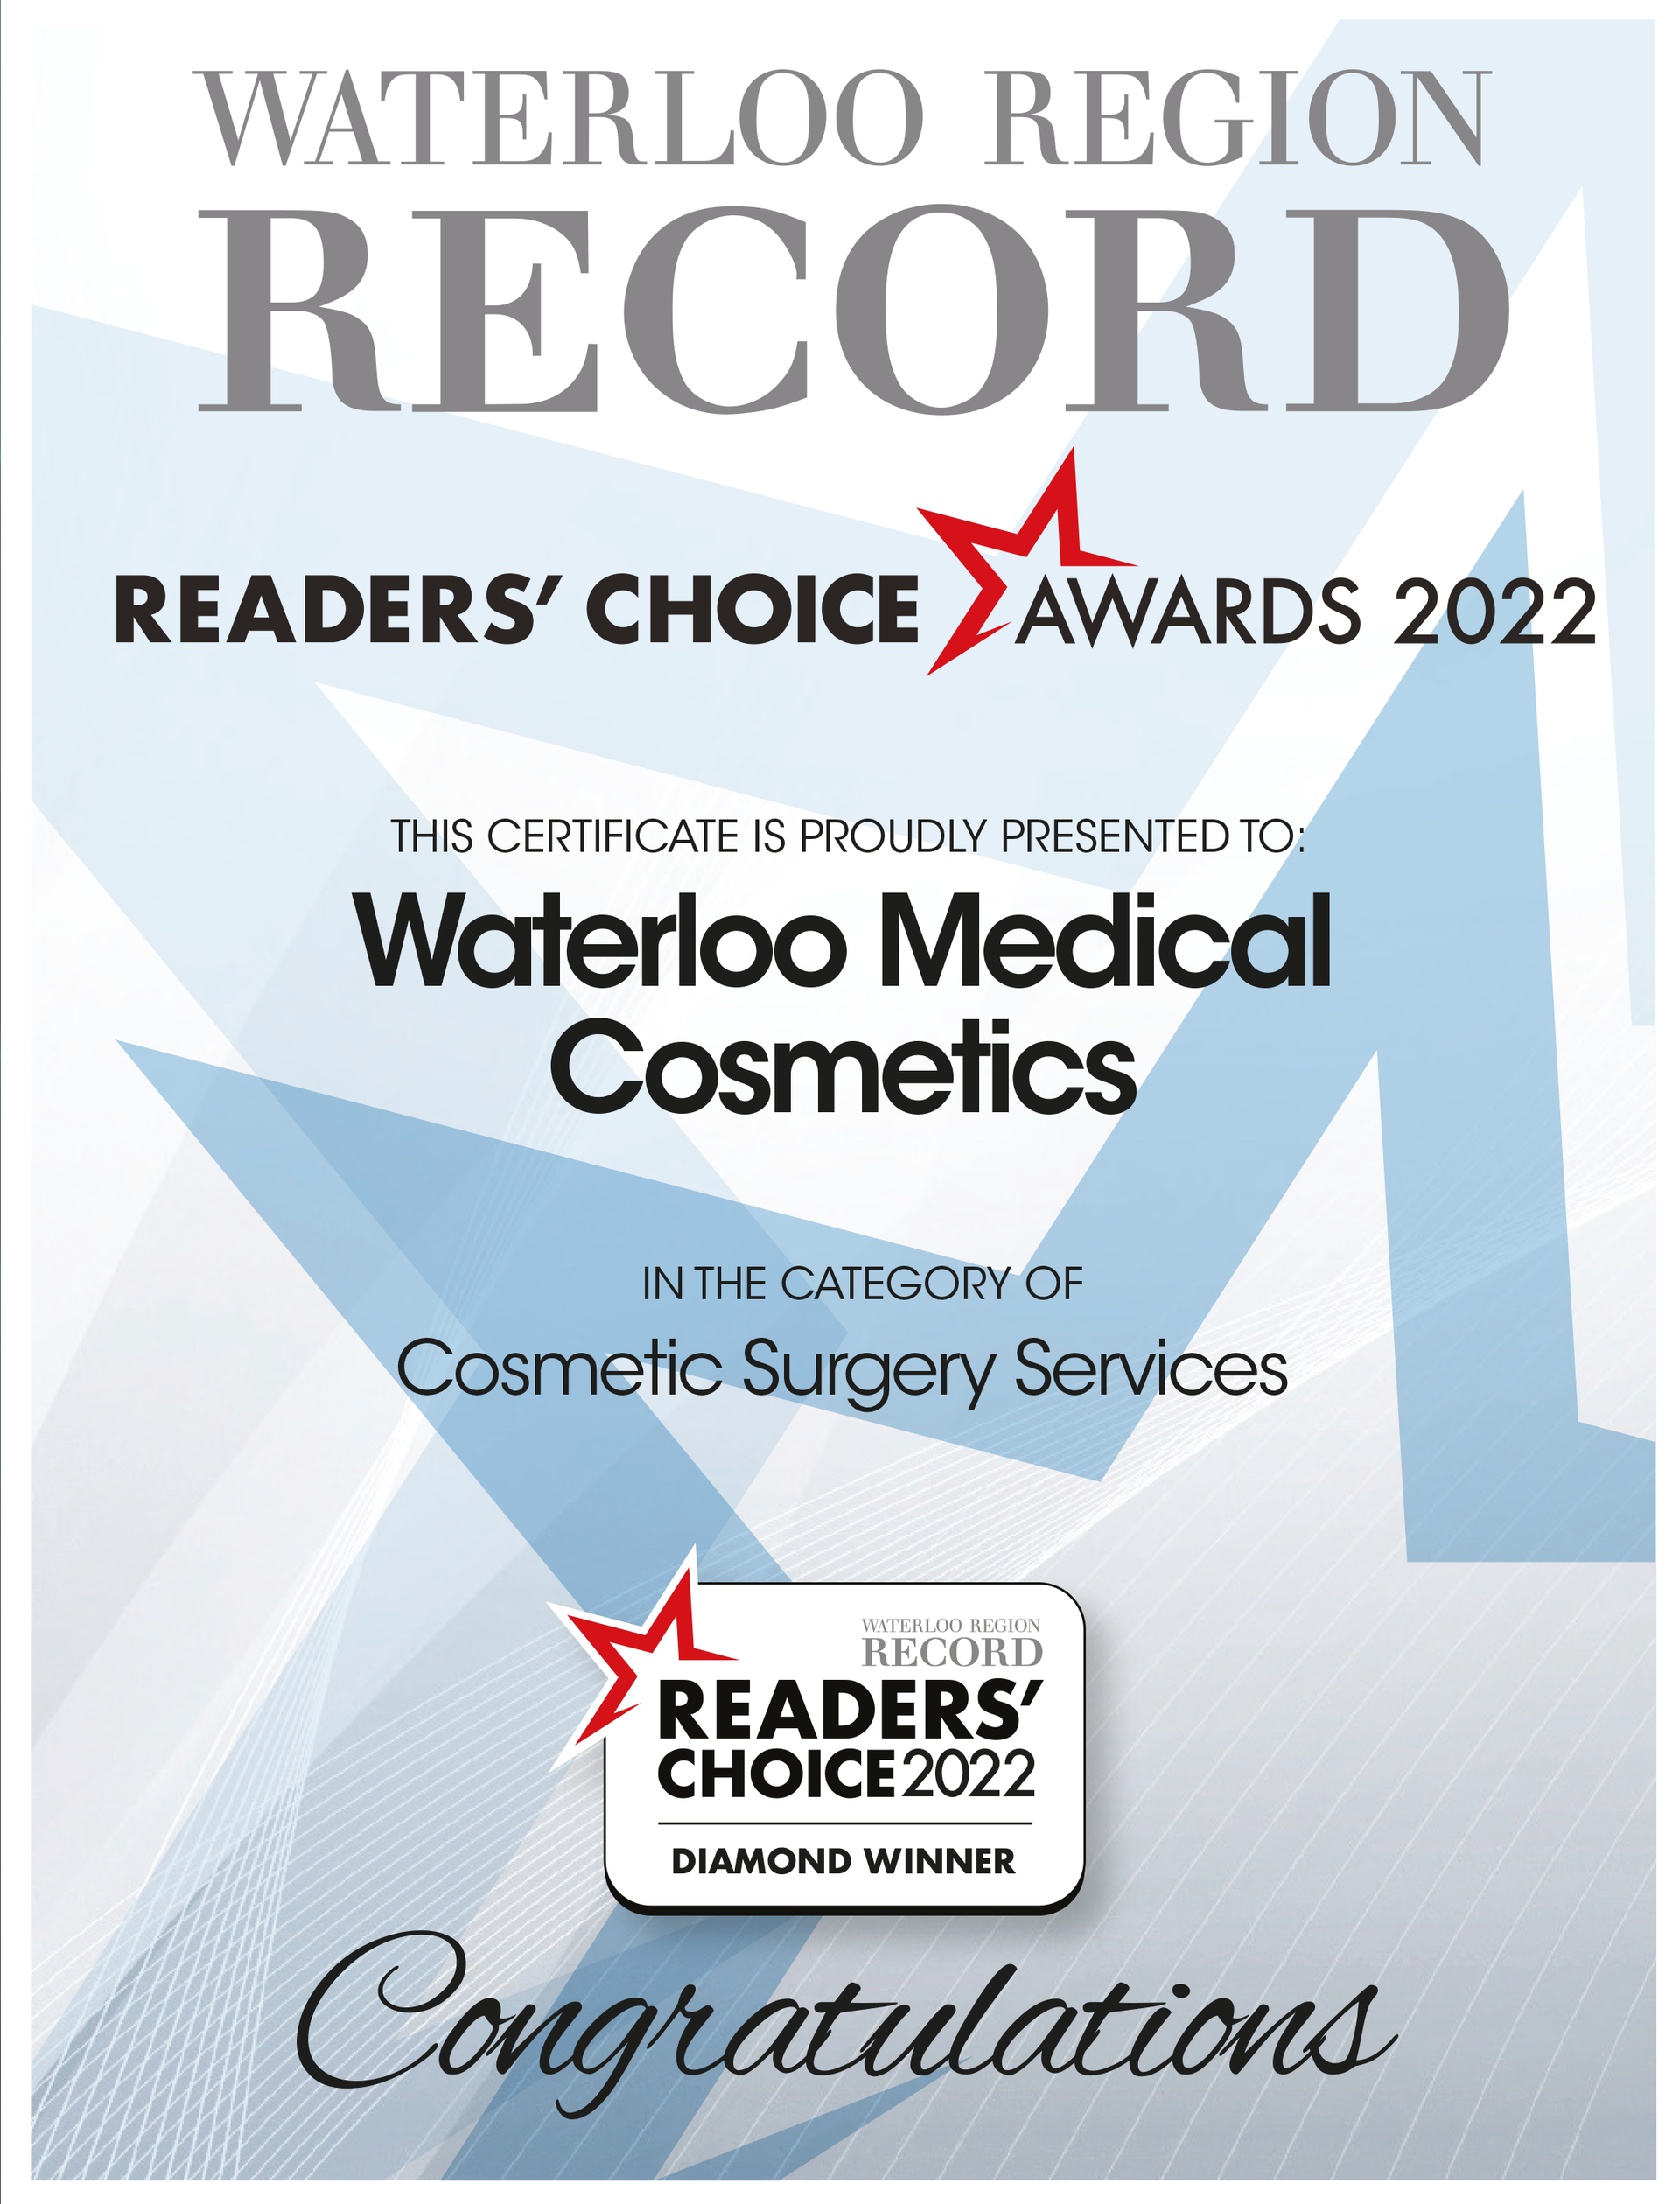 A waterloo region record readers choice award for waterloo medical cosmetics